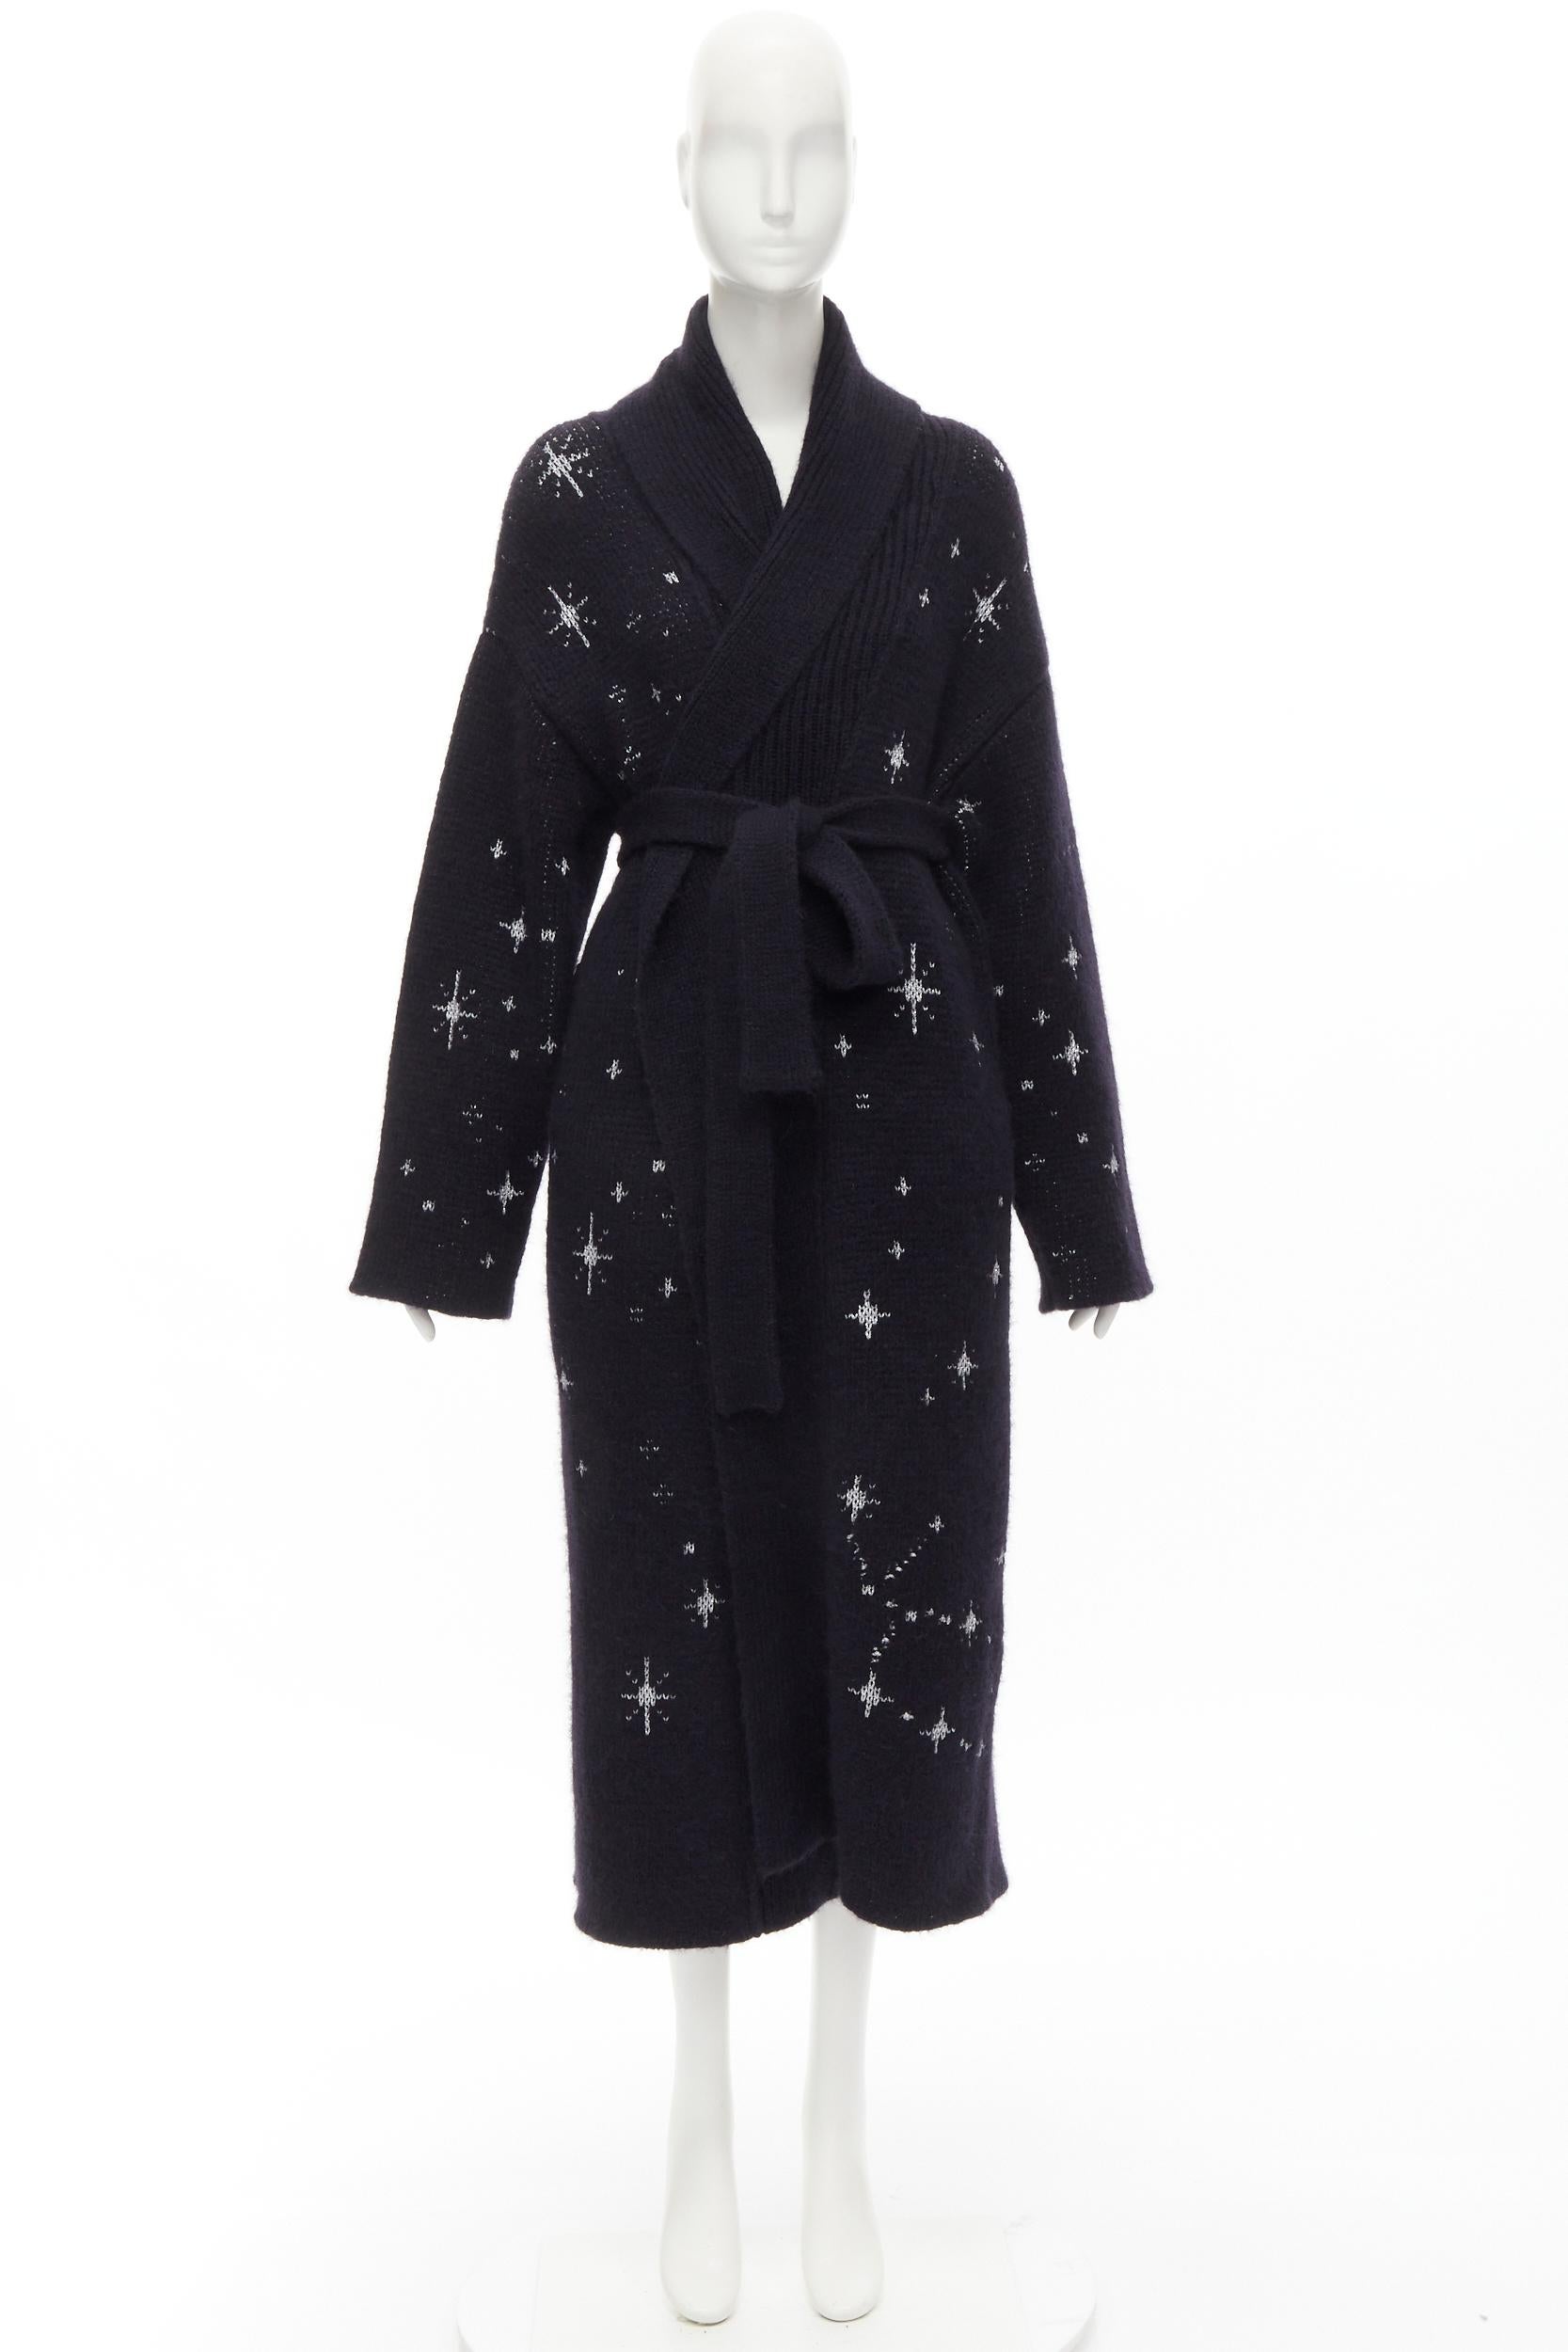 ALANUI alpaca wool chunky knit navy blue silver starburst cardigan coat robe M For Sale 2